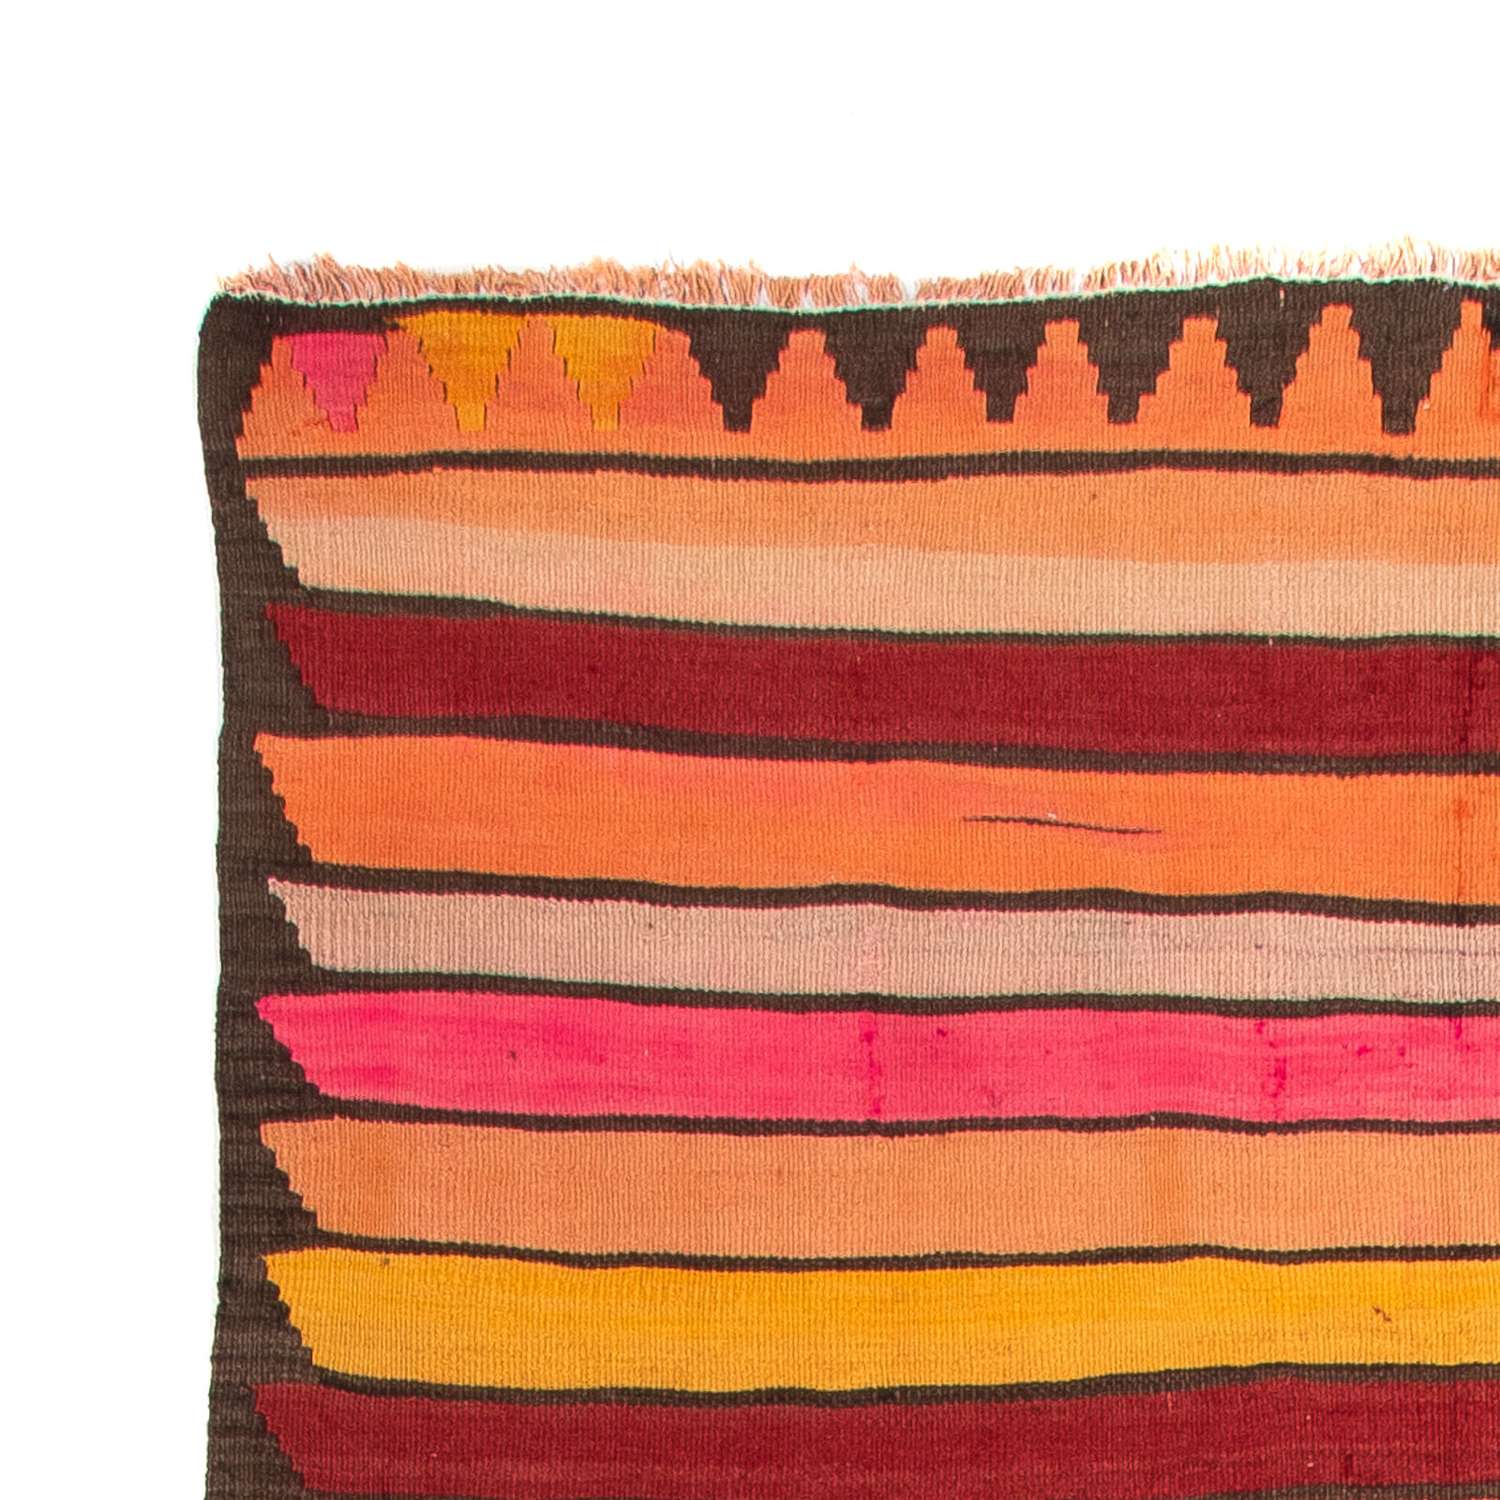 Alfombra de pasillo Alfombra Kelim - Antigua - 370 x 160 cm - multicolor